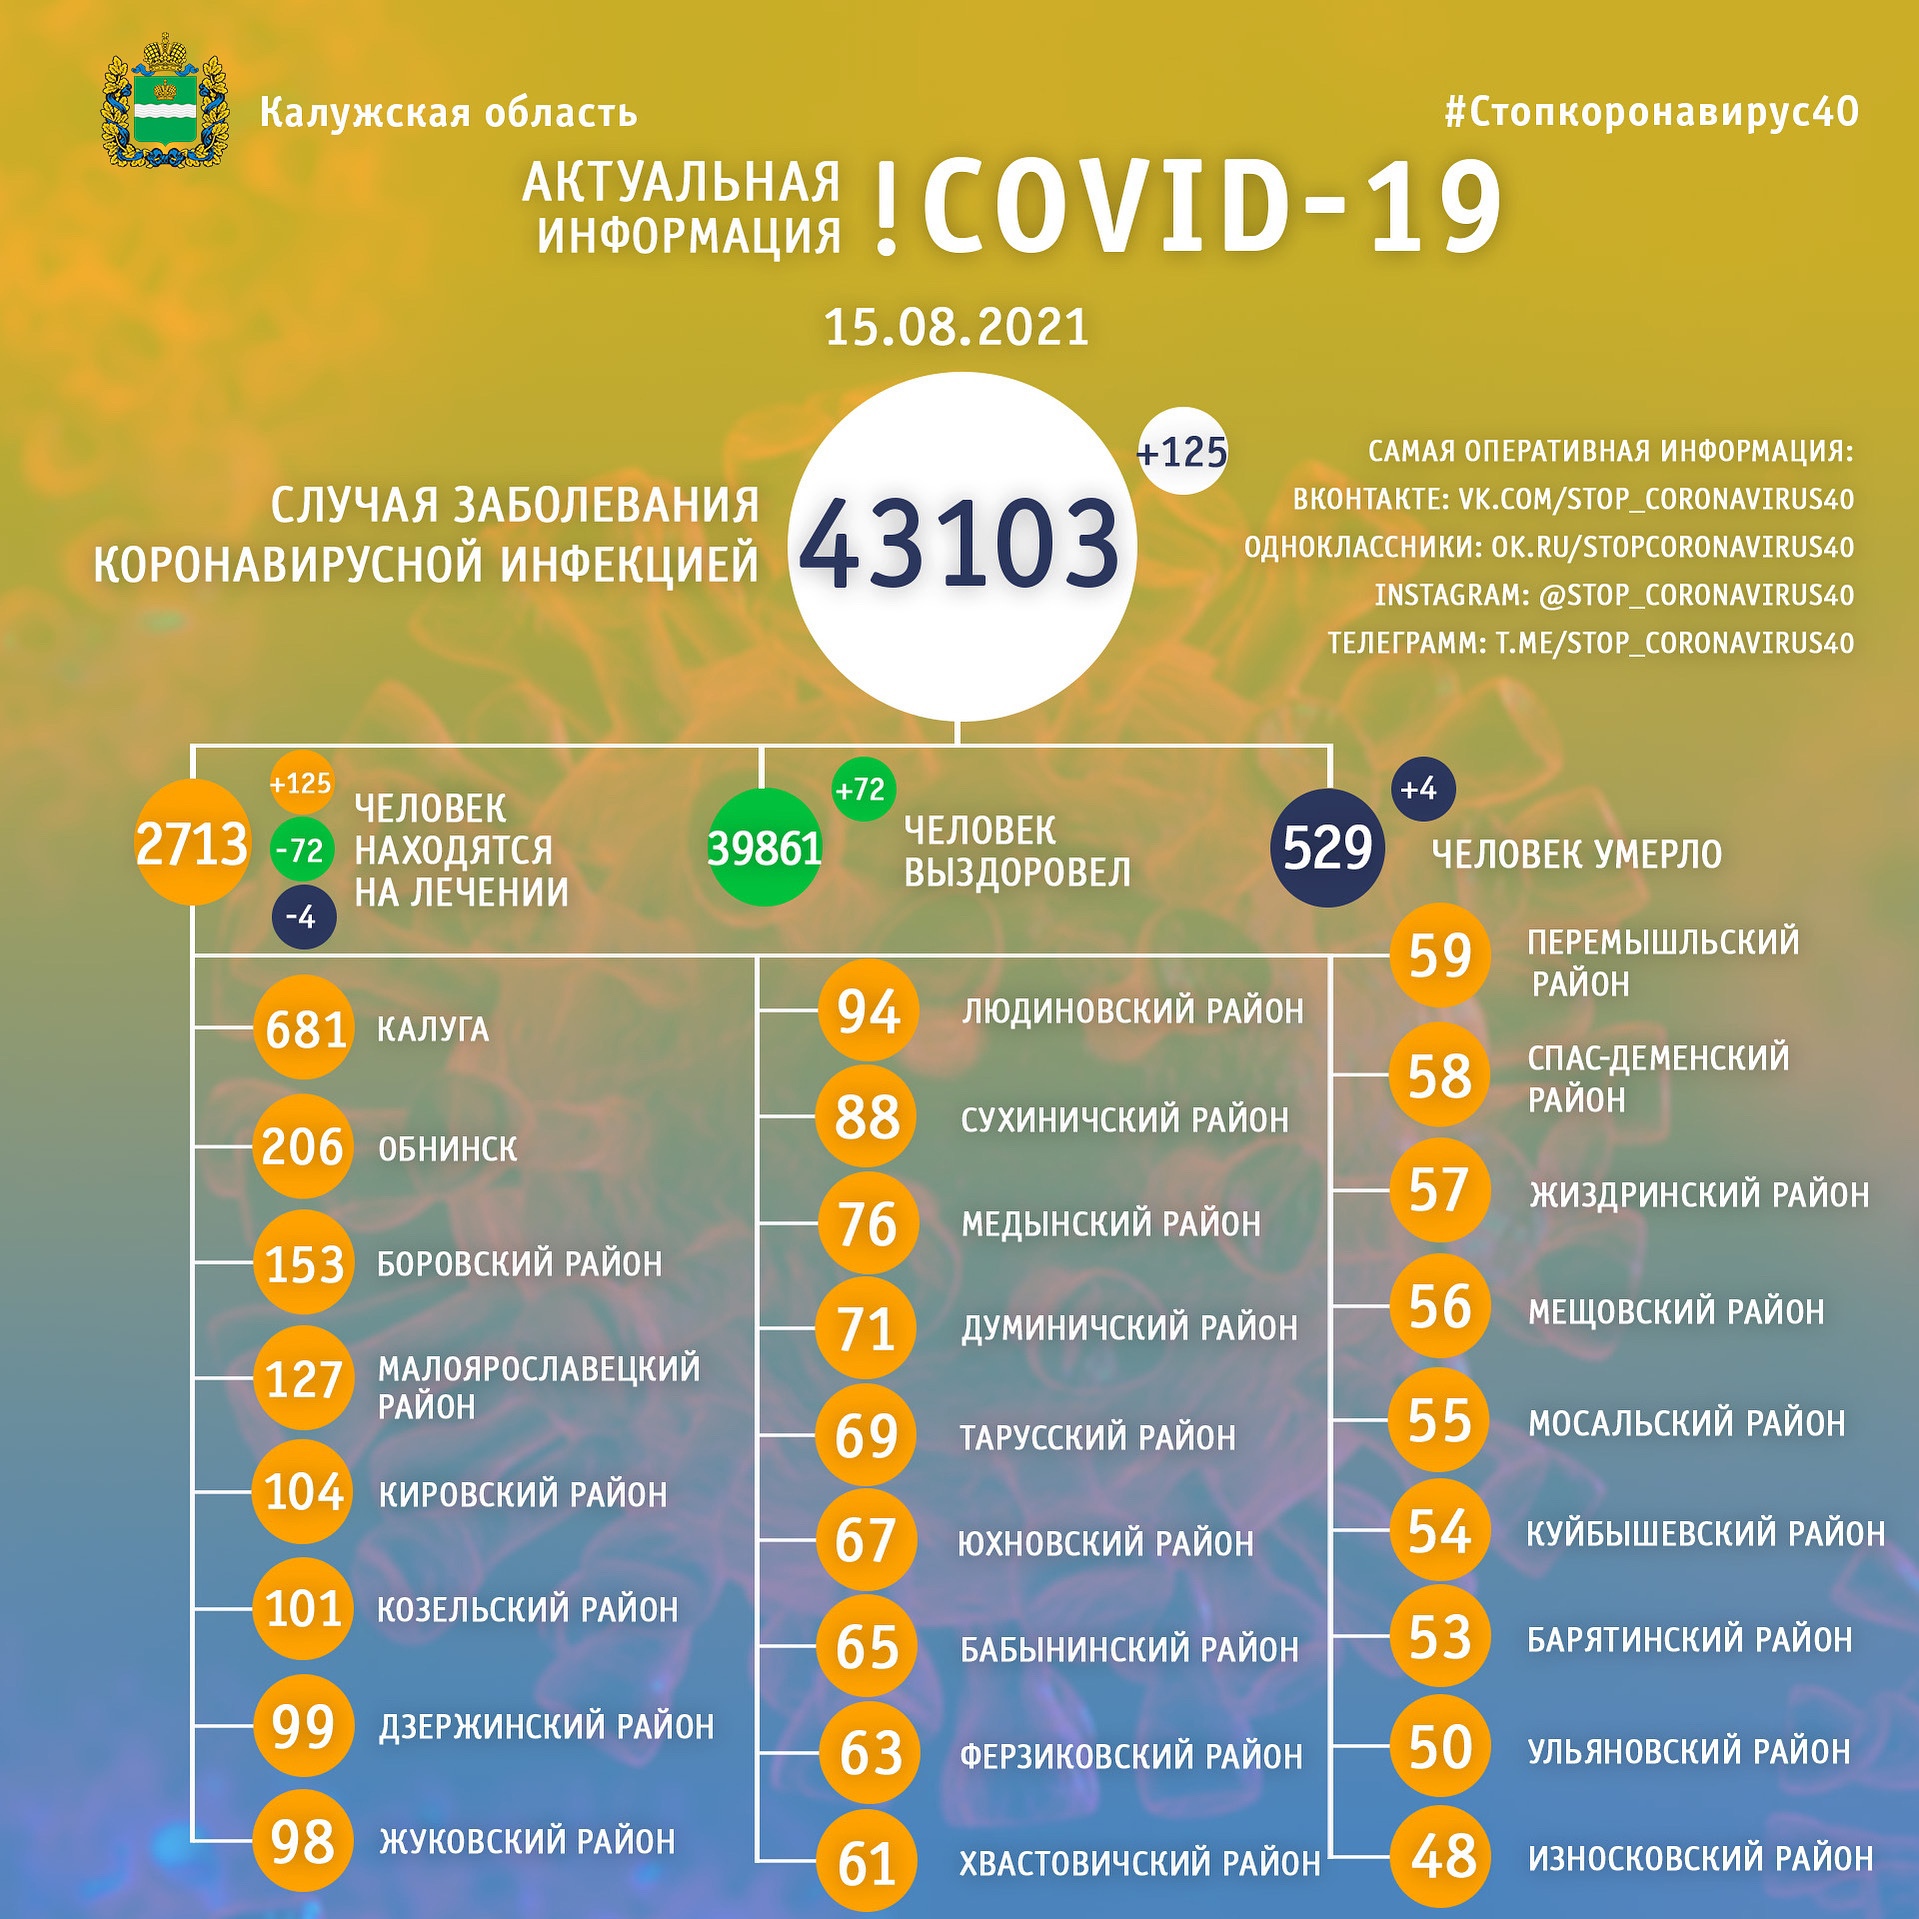 Официальная статистика по коронавирусу в Калужской области на 15 августа 2021 года.